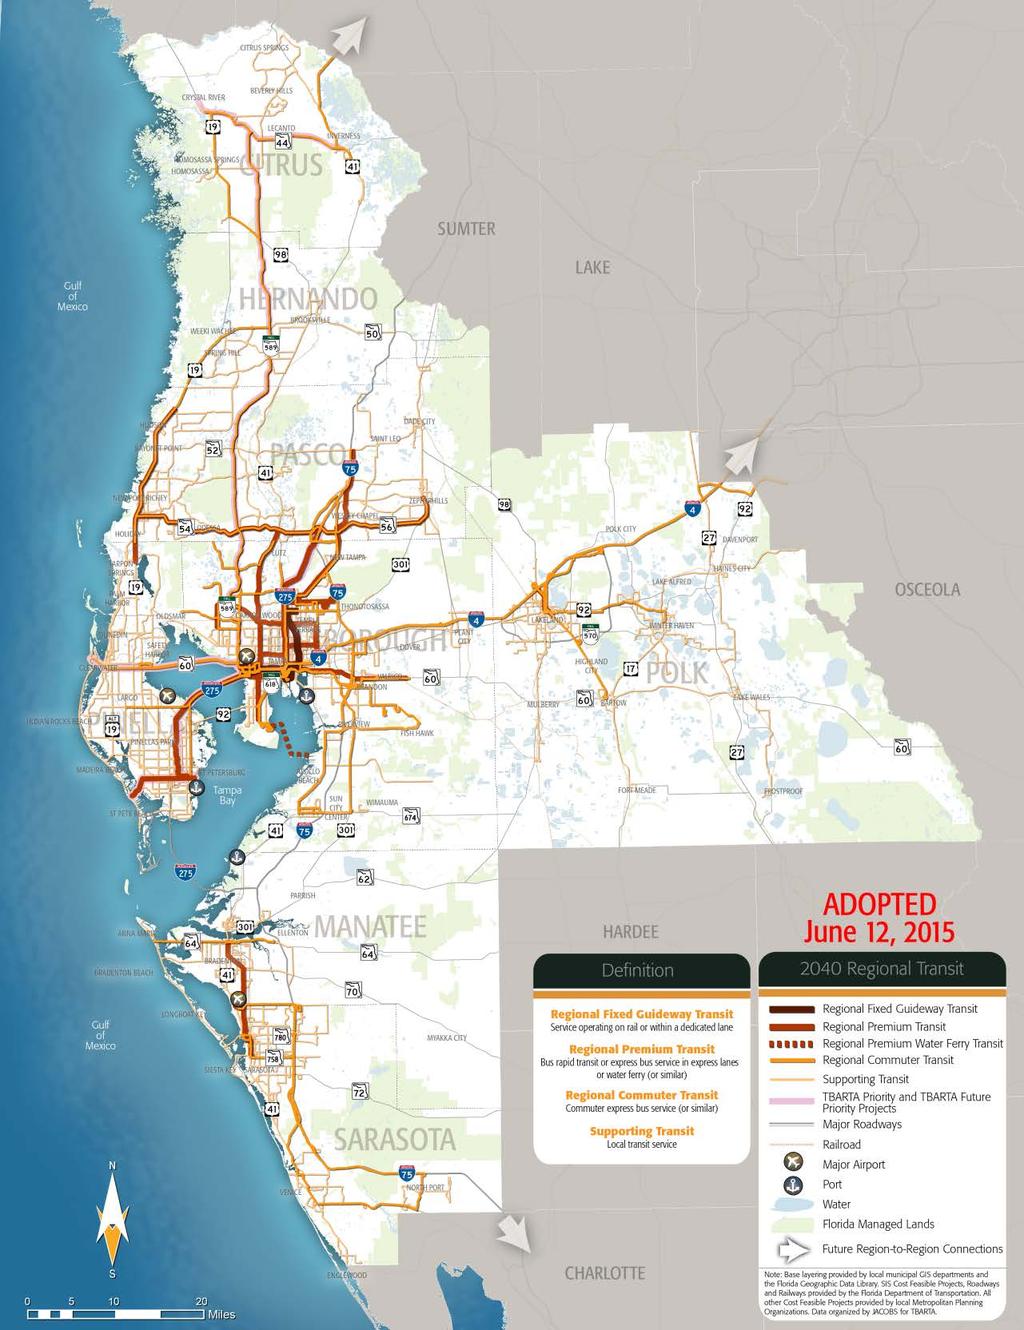 Figure 3-1: 2040 Regional Transit Projects Tampa Bay Area